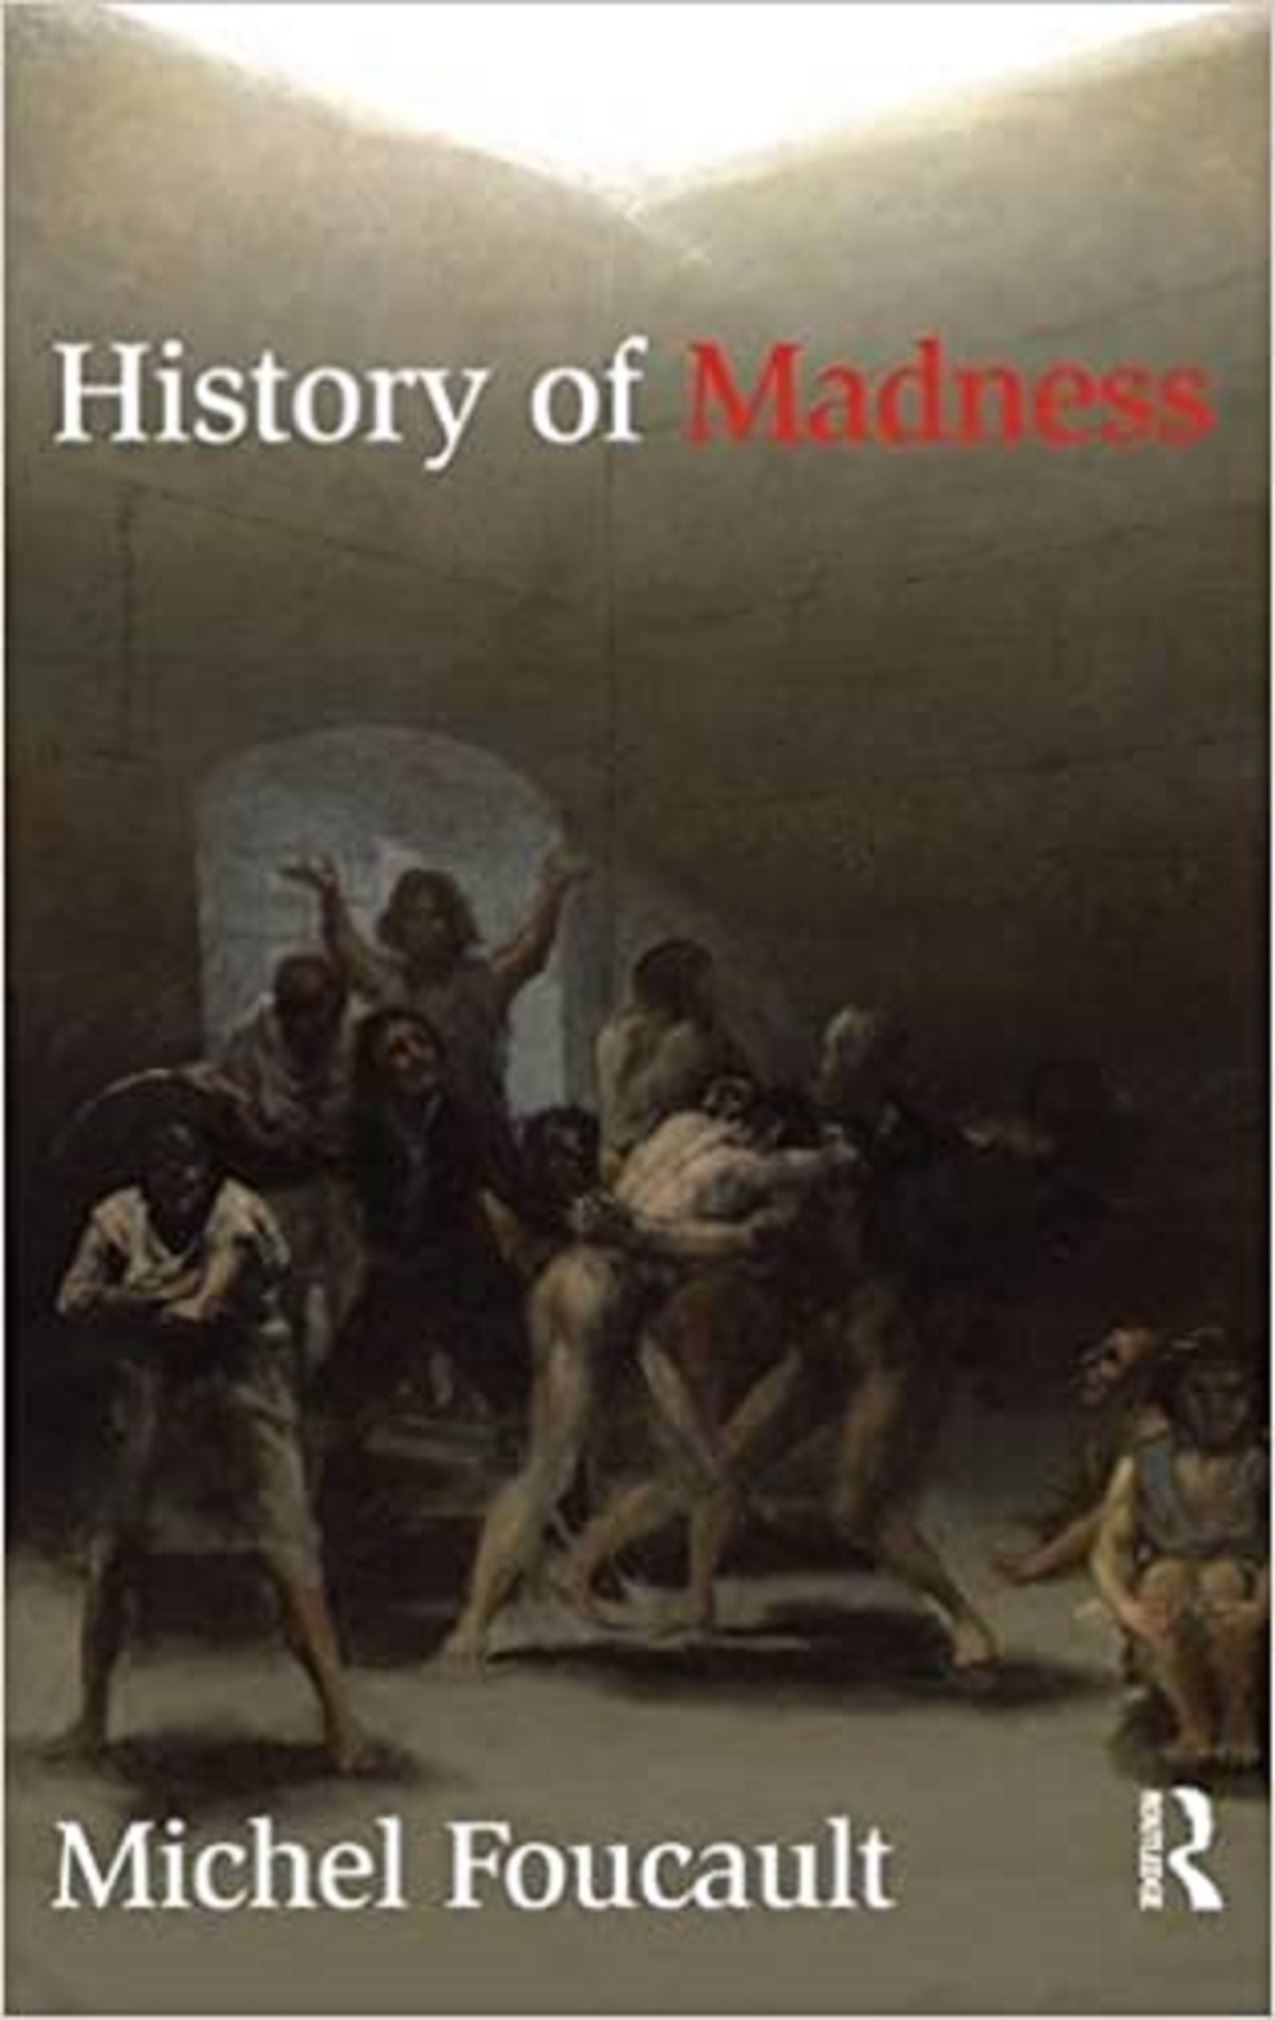 History of Madness | Michel Foucault image1